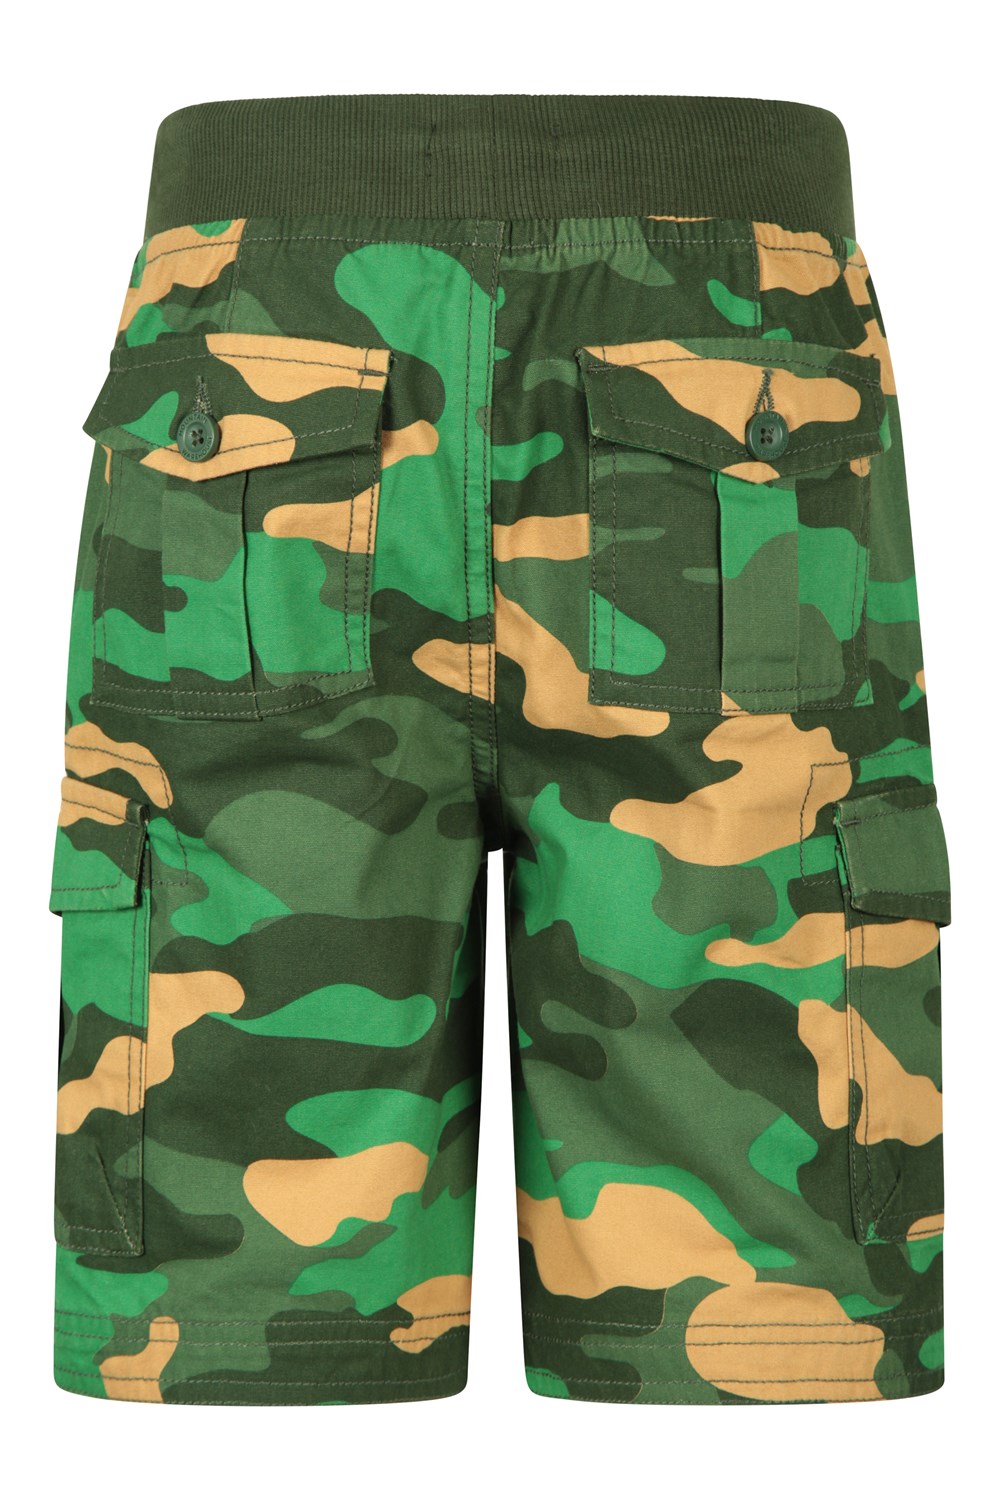 Mountain Warehouse Cargo Kids Shorts 100% Cotton Summer Pants 